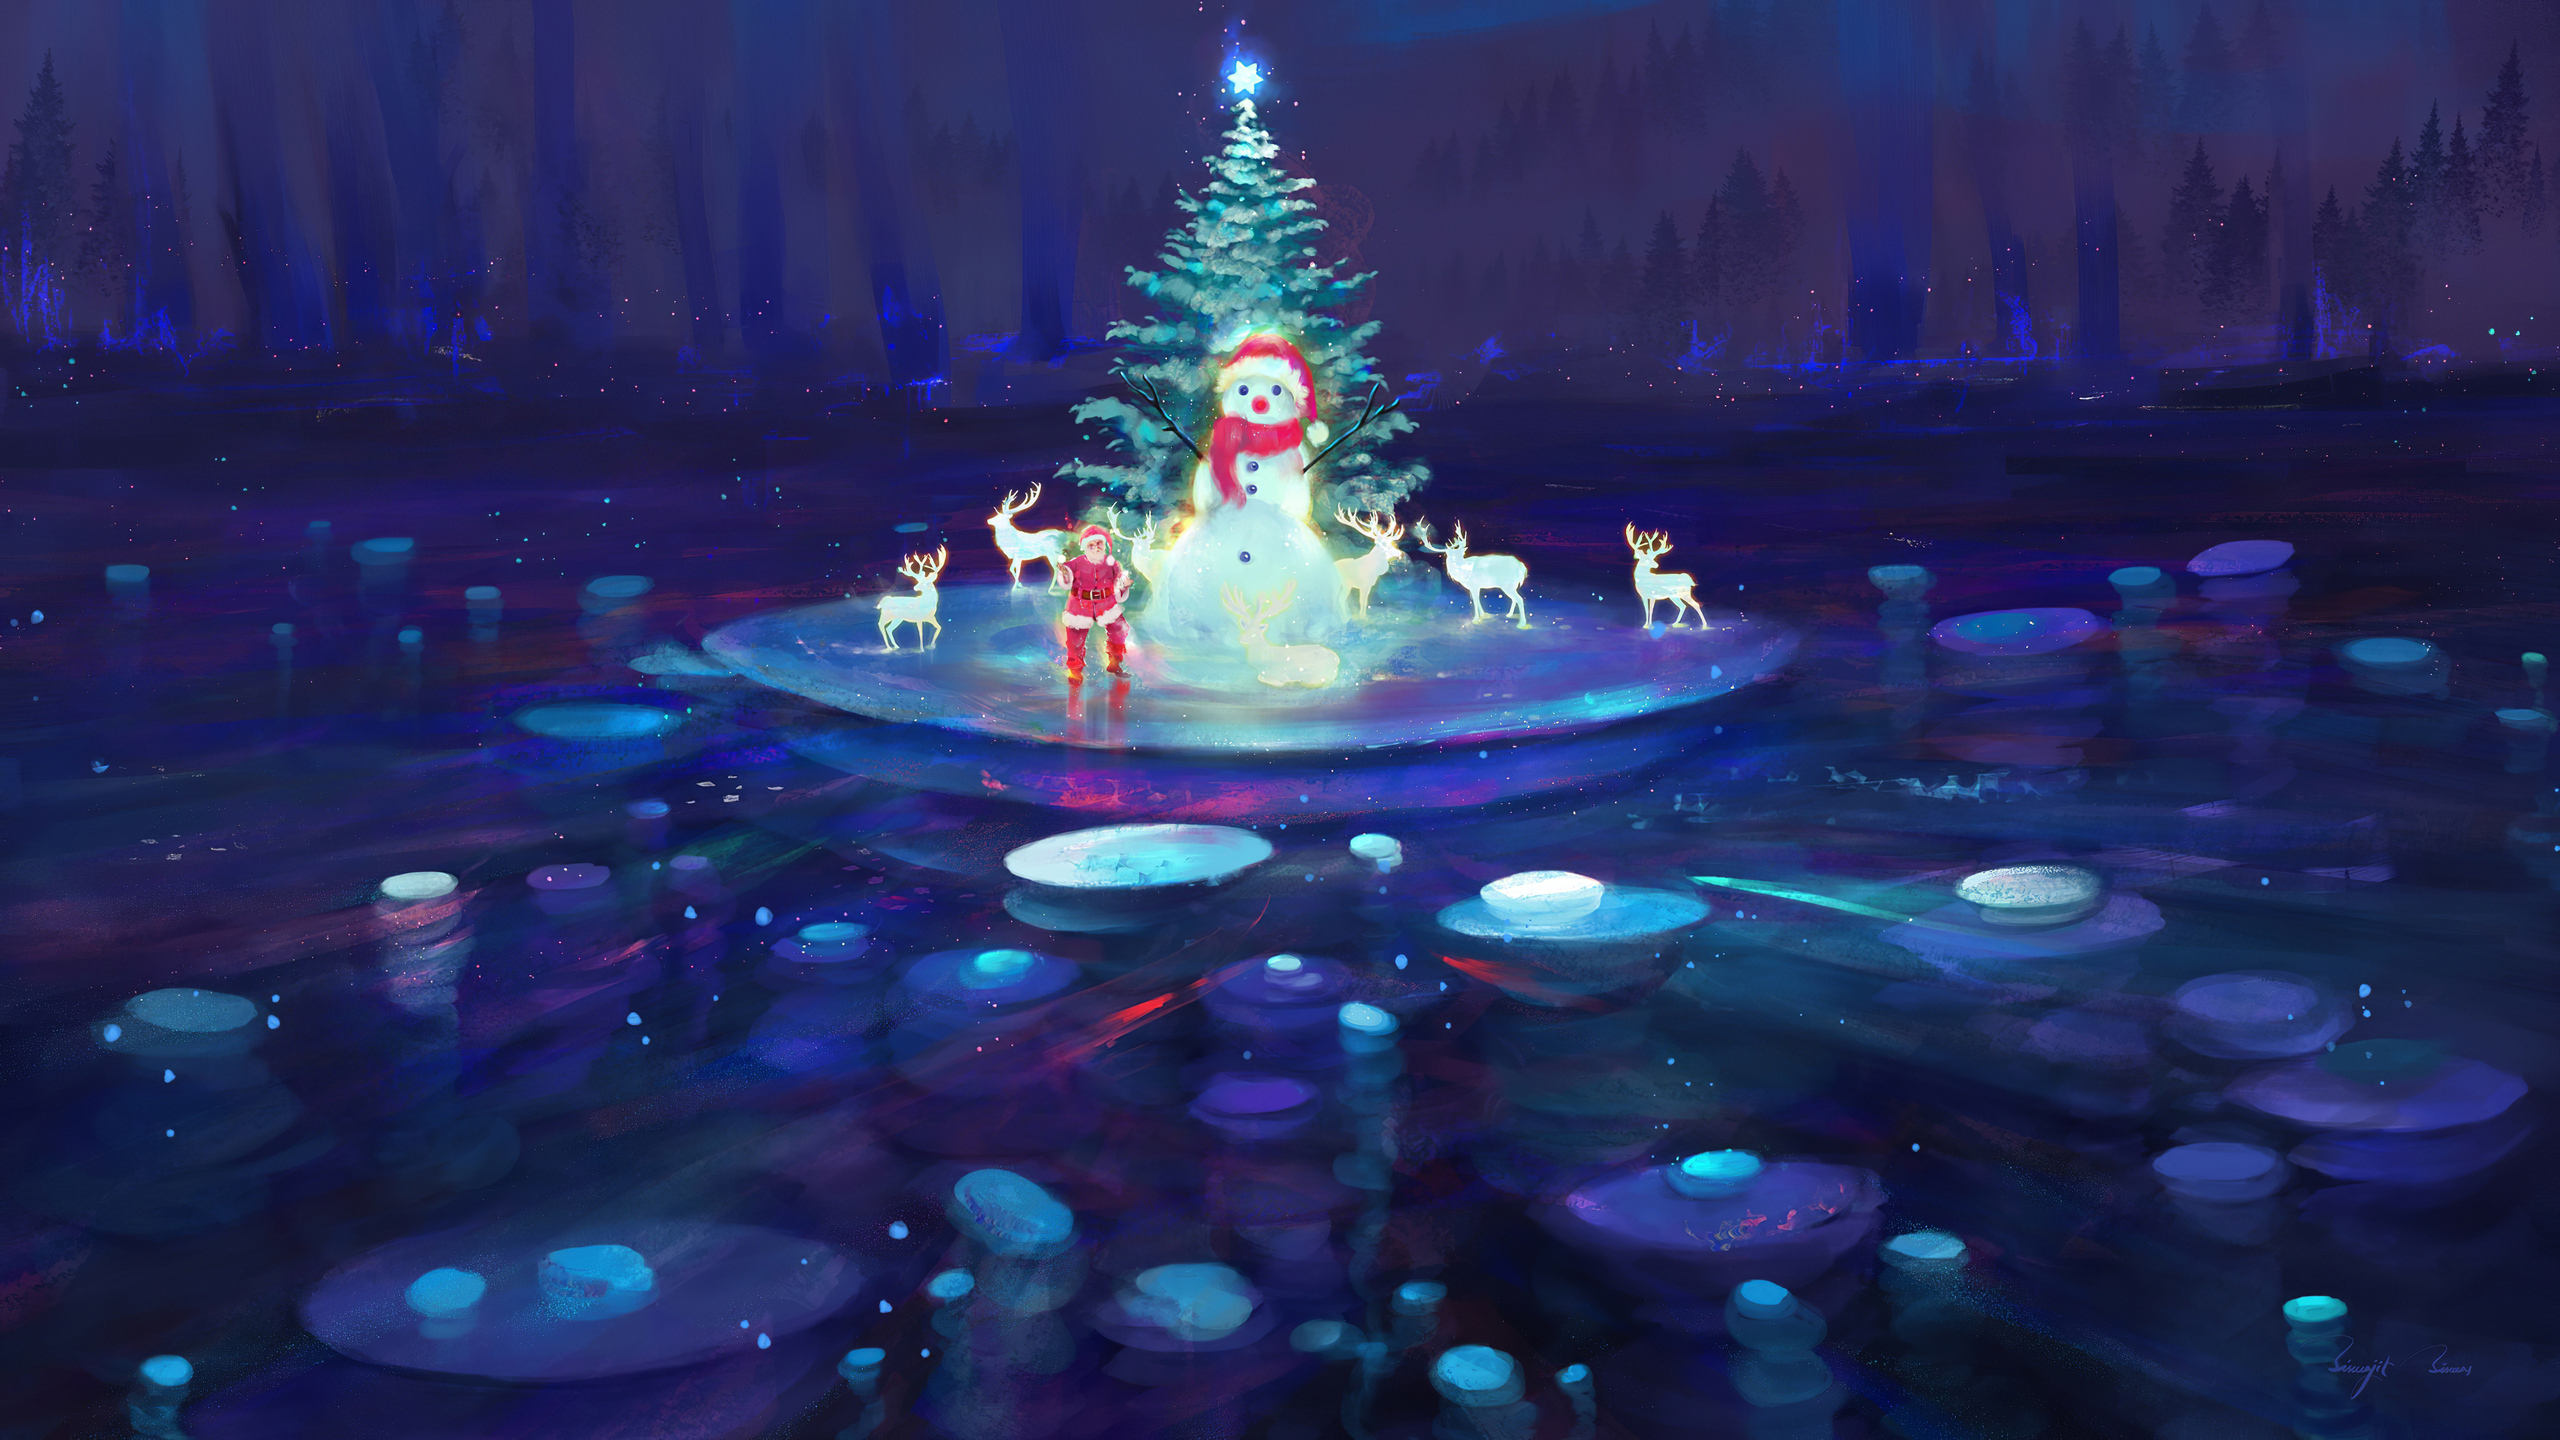 Reindeer Christmas Season Santa Colorful Digital Art 4k 1440P Resolution HD 4k Wallpaper, Image, Background, Photo and Picture